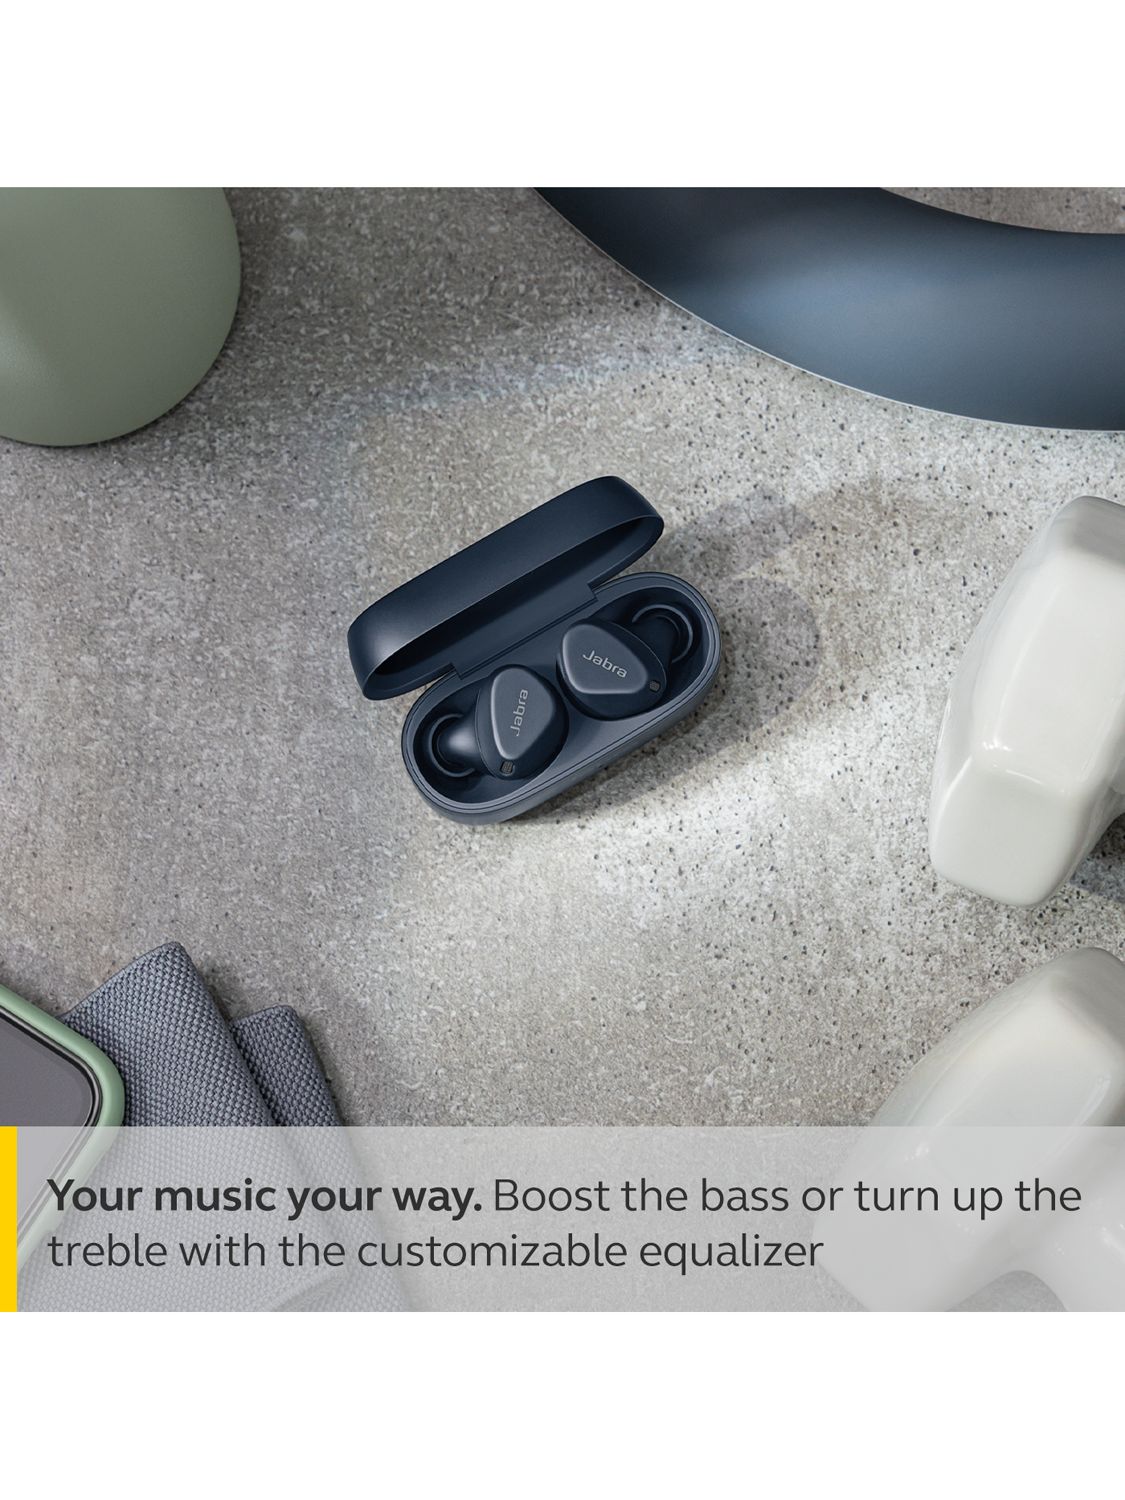 Jabra Elite 4 Active True Wireless Bluetooth Noise Cancelling Earbuds, Black